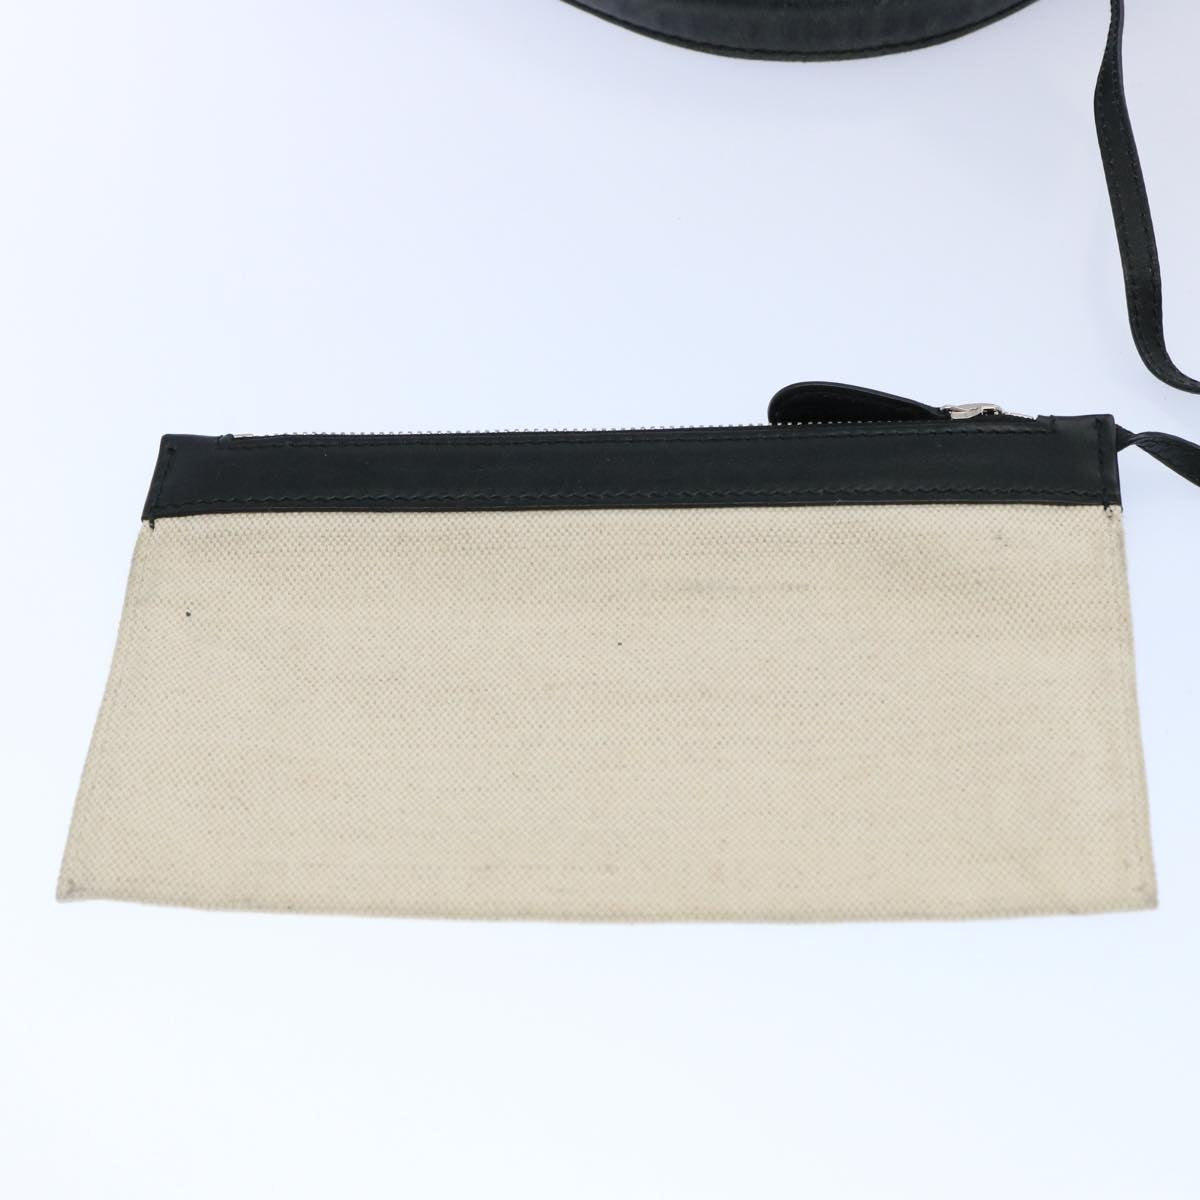 BALENCIAGA Tote Bag Canvas White Black 339933 Auth ep2845